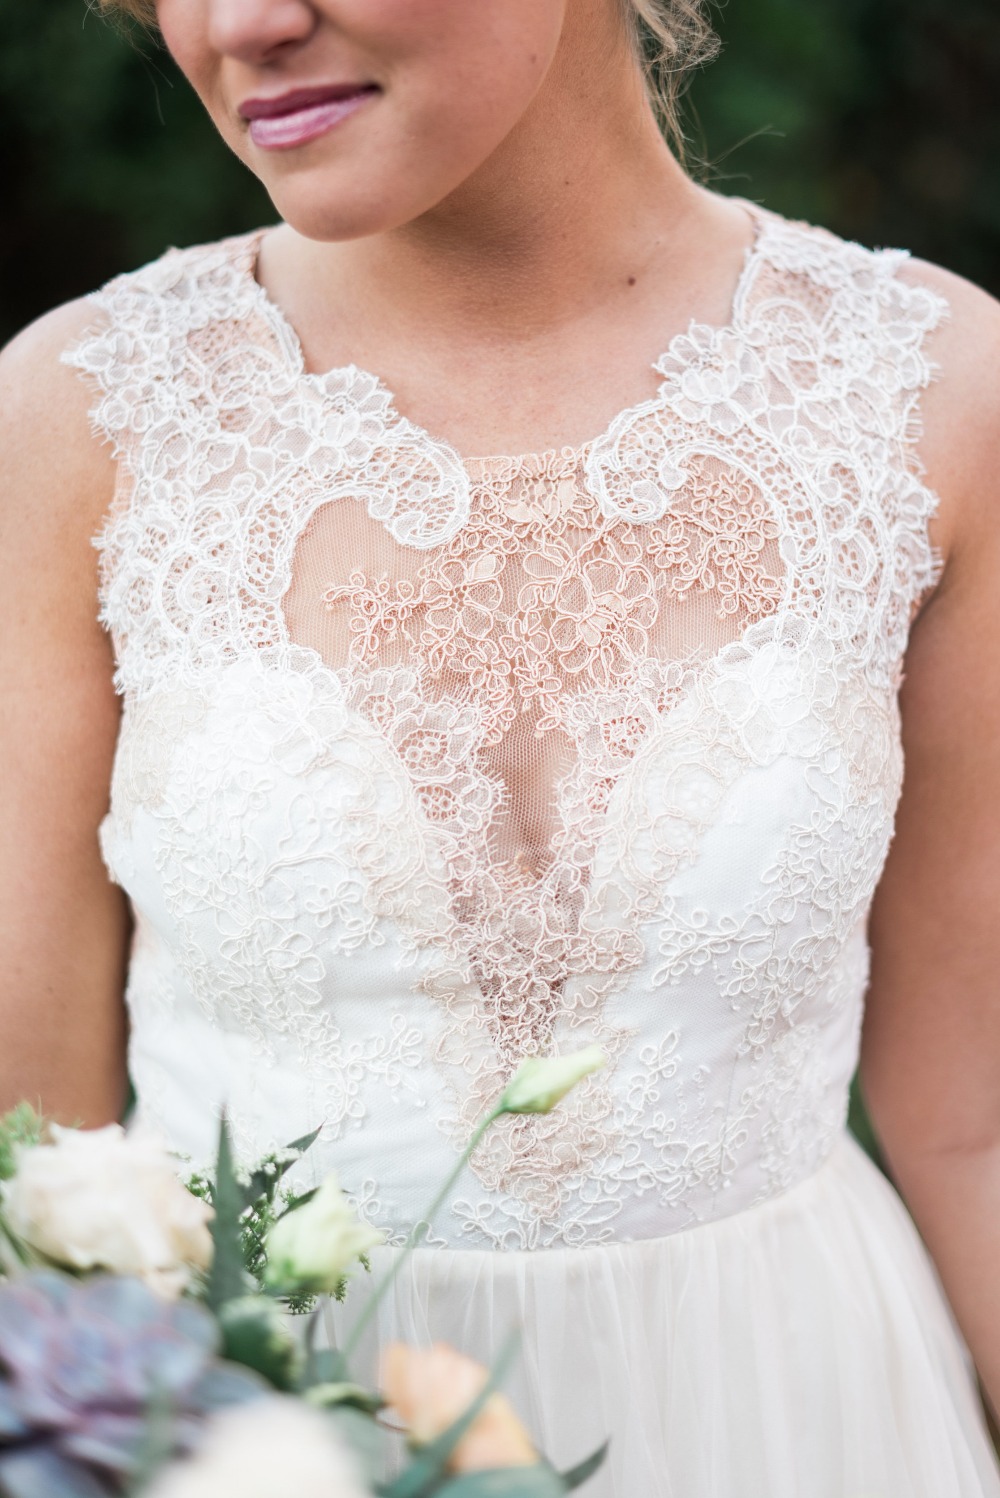 lace detailing on vintage style wedding dress